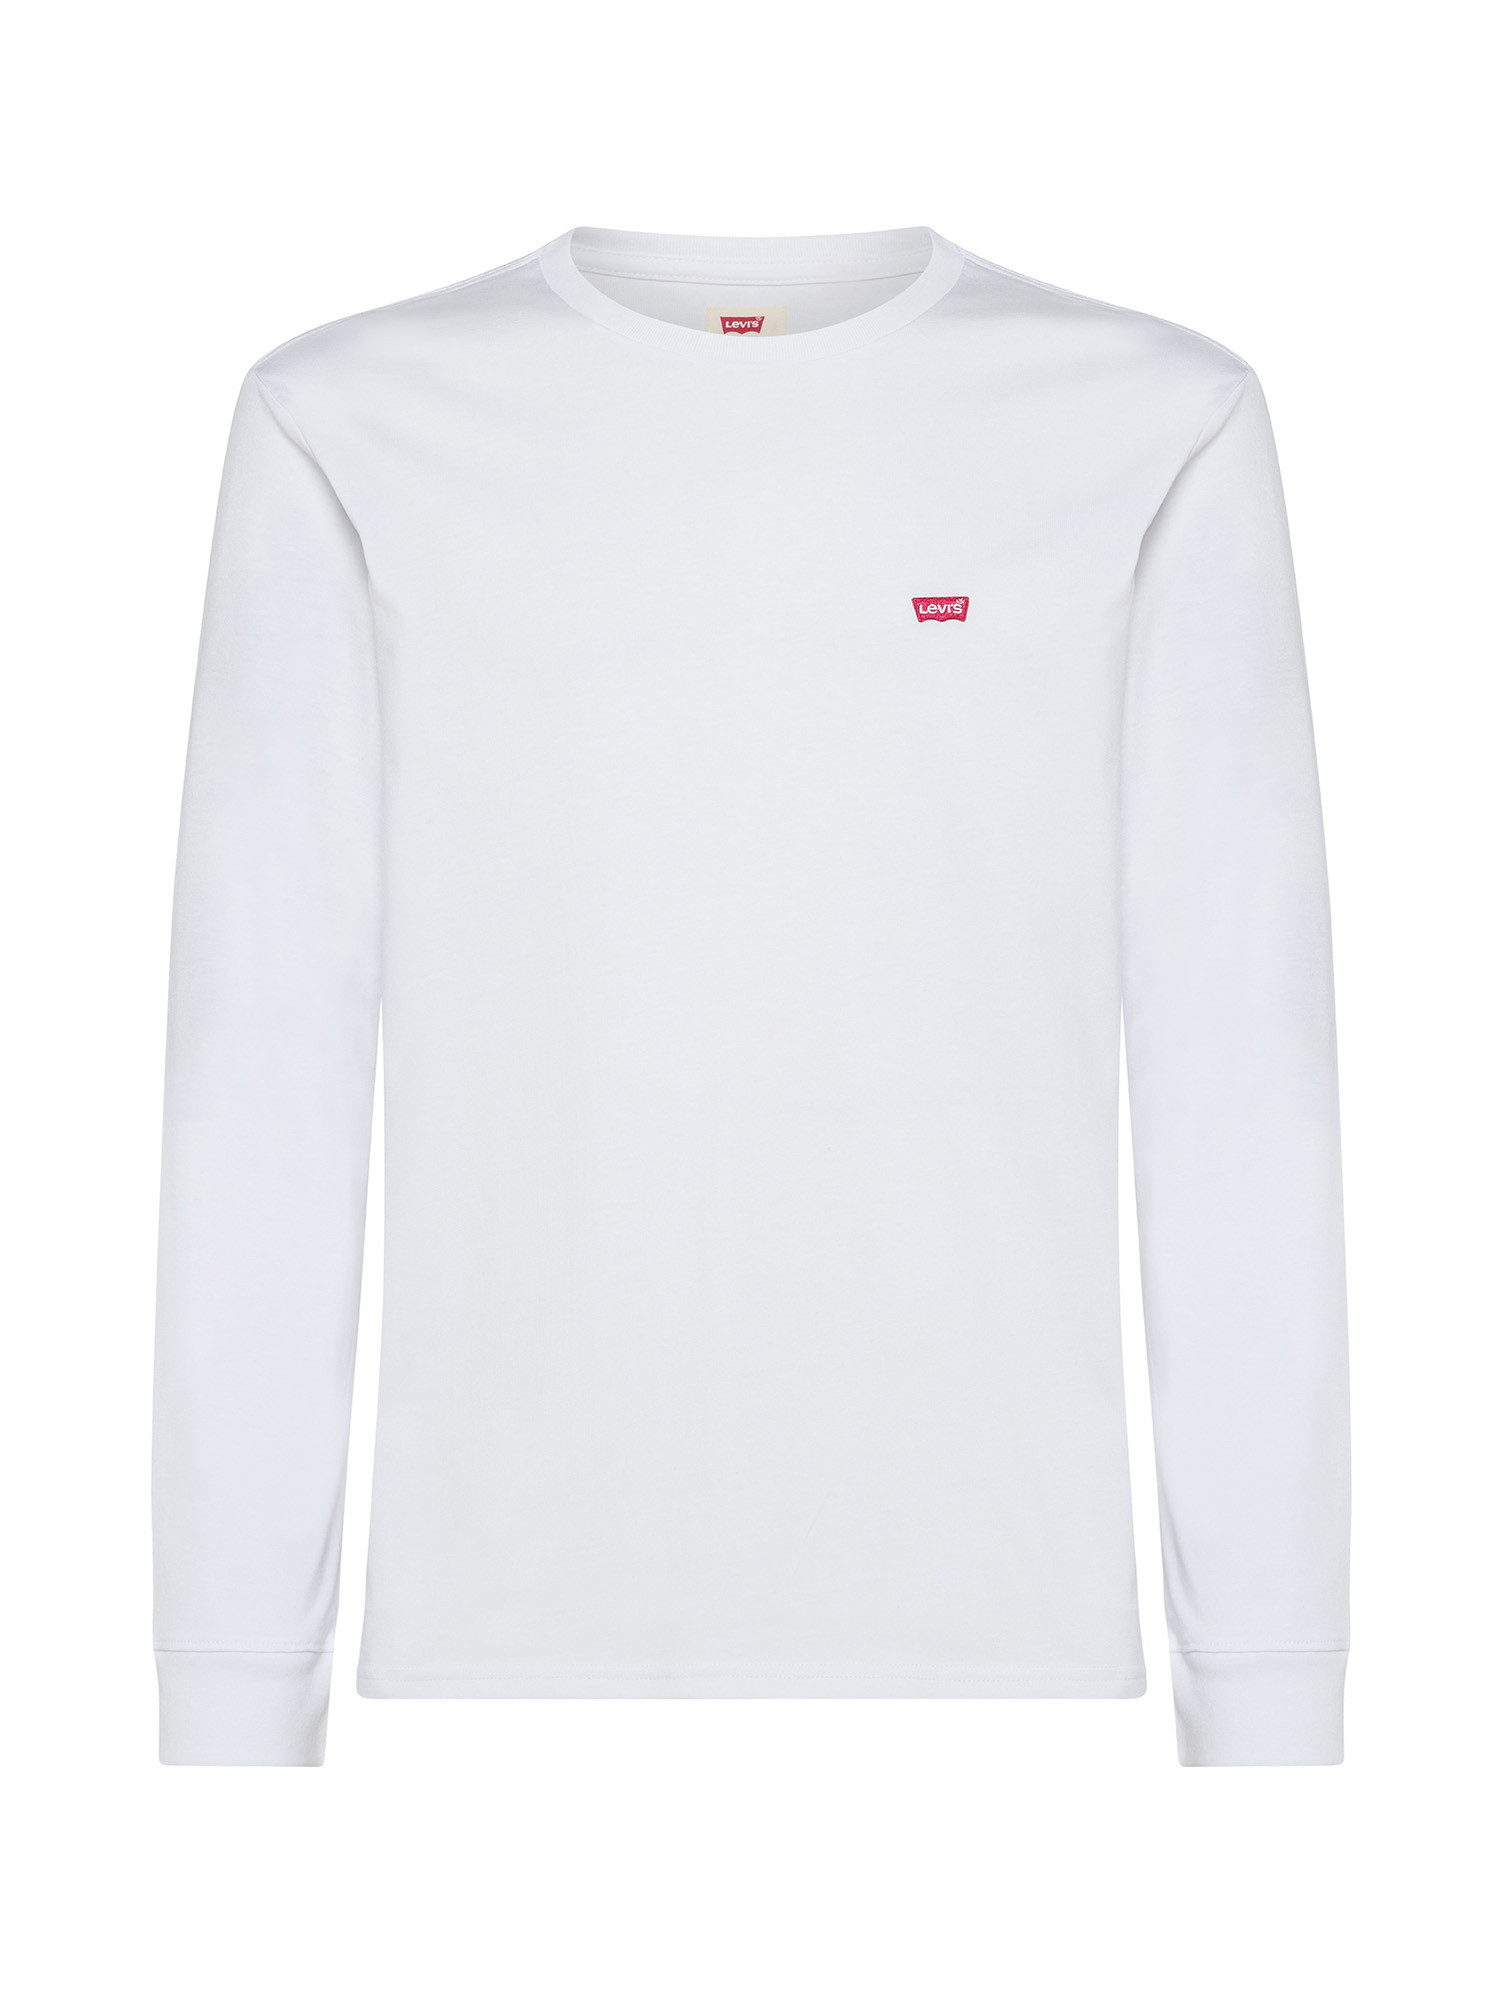 Levi’s - T-shirt girocollo a tinta unita, Bianco, large image number 0